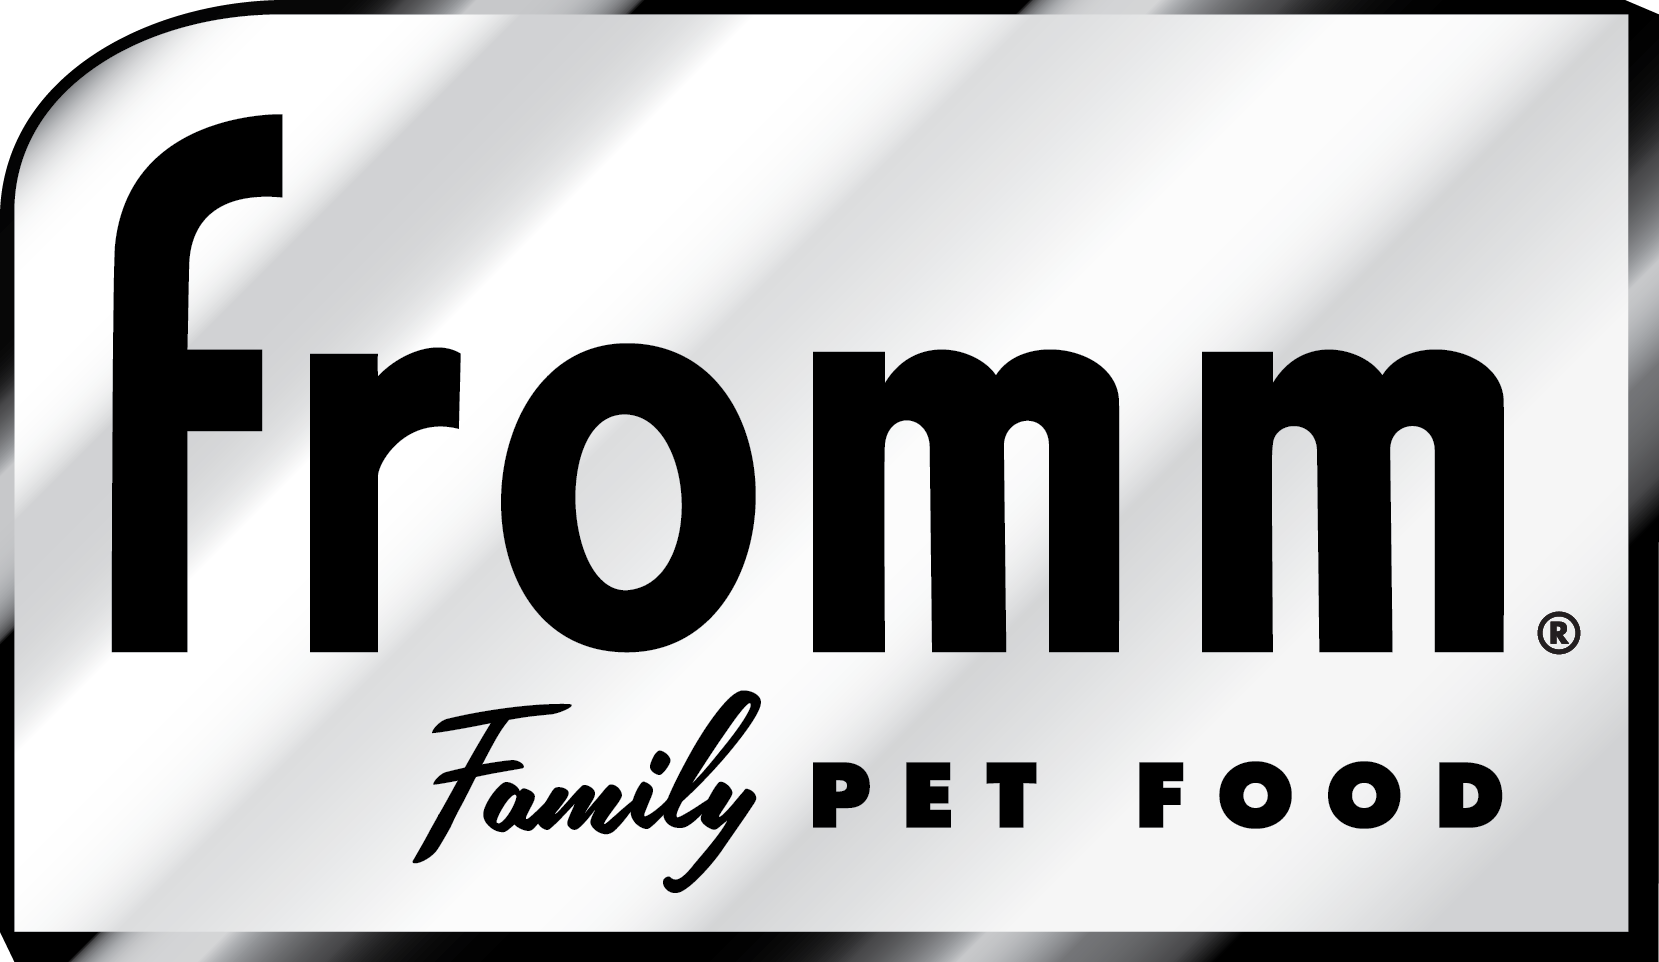 fromm-brand-logo-transparent